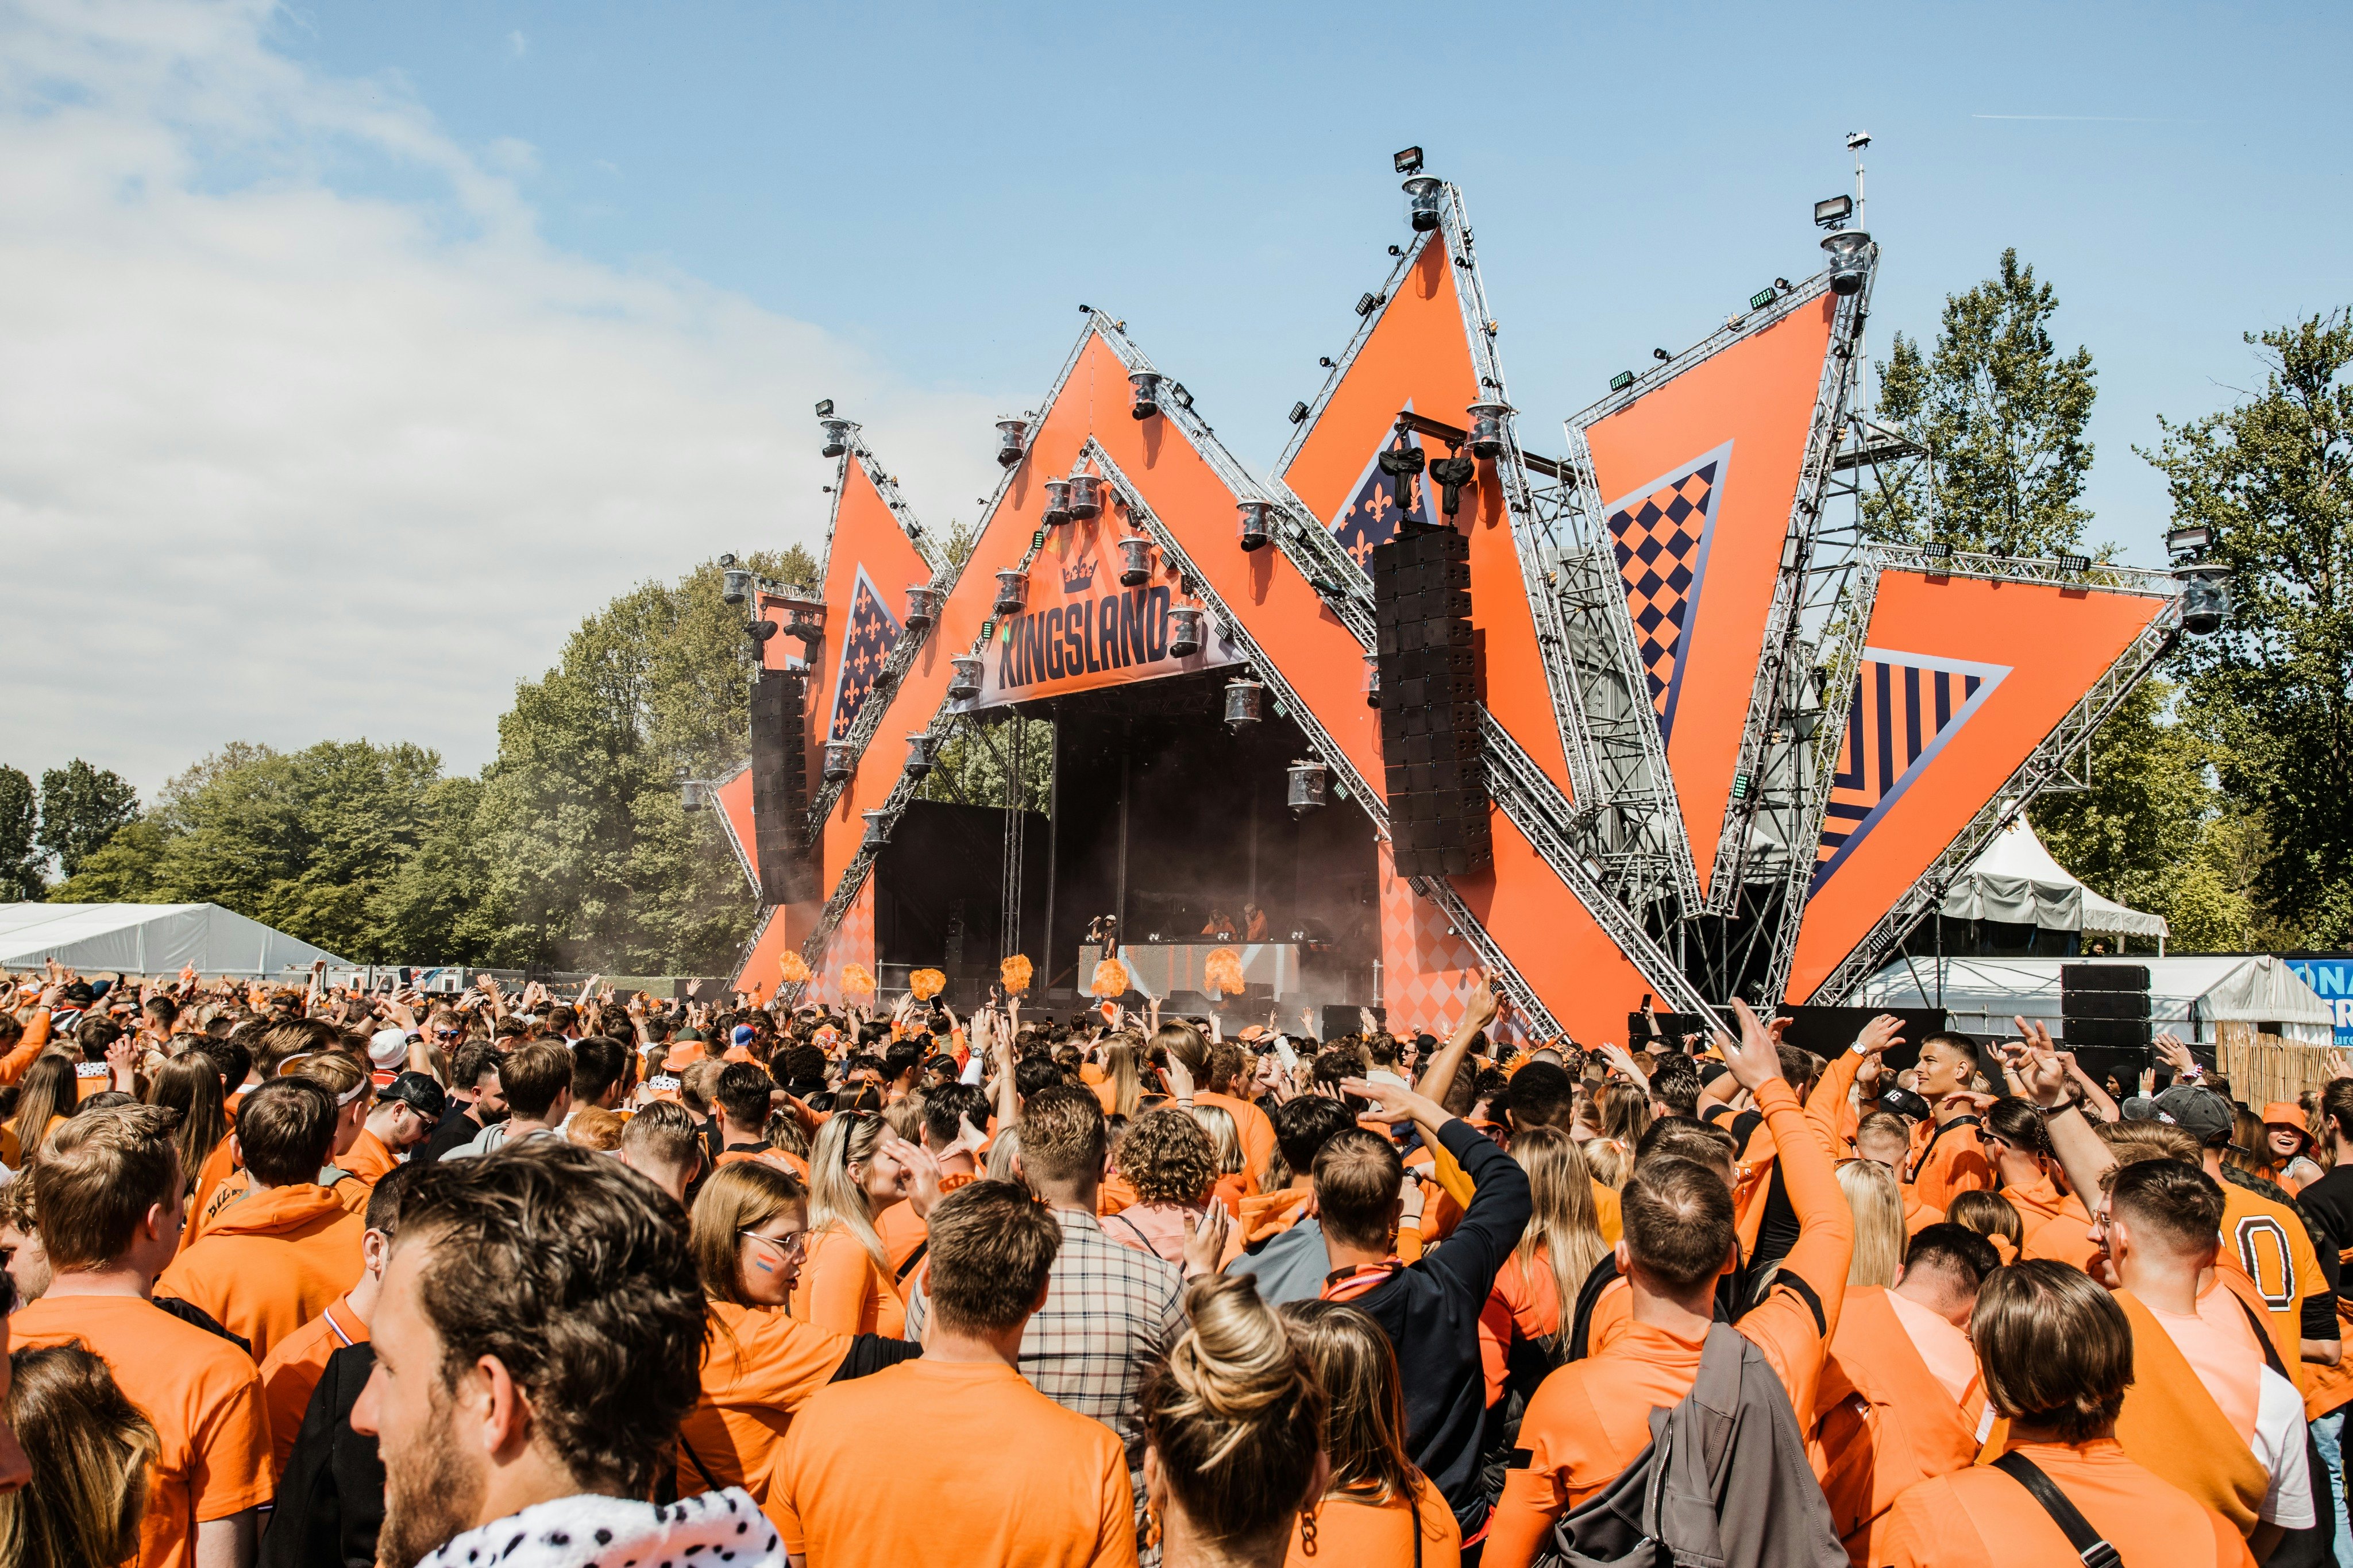 Kingsland Festival Rotterdam Tickets | Tiqets